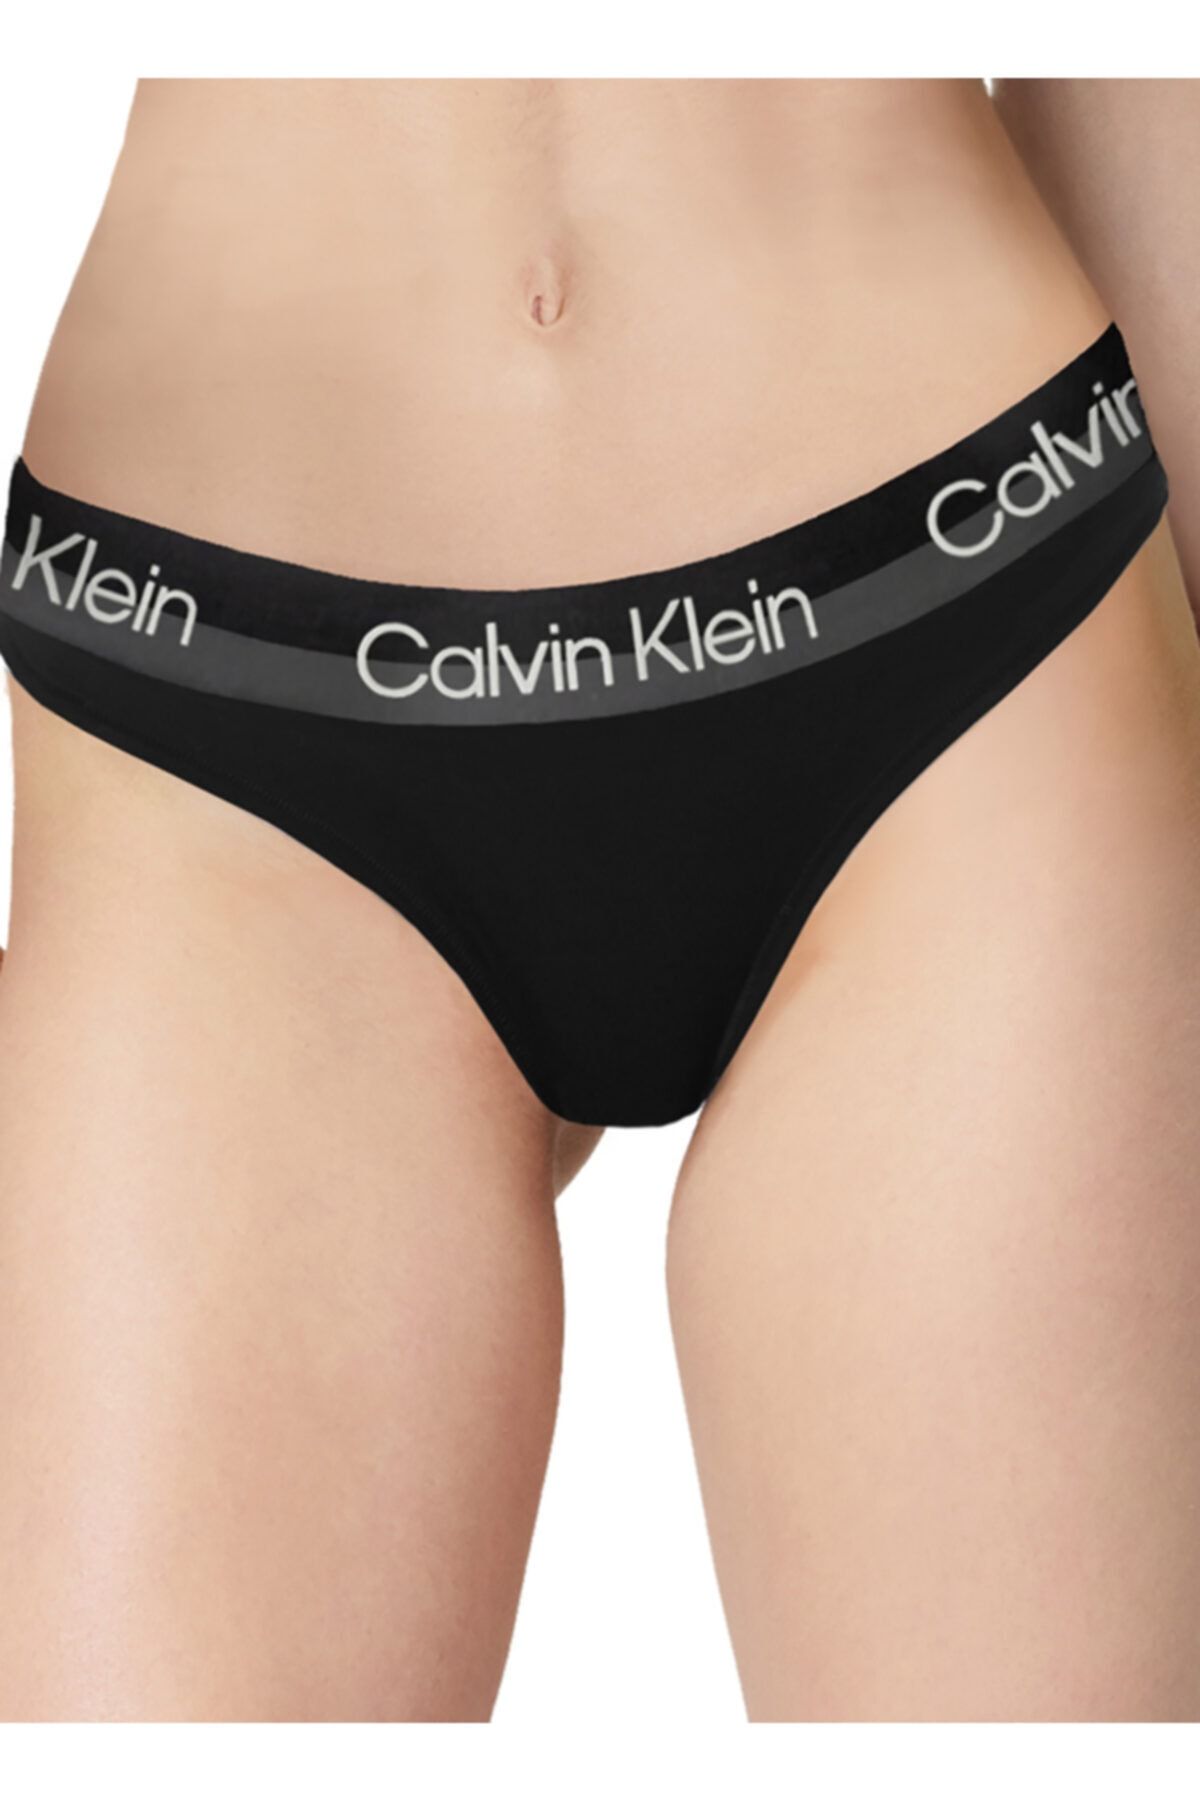 Calvin Klein Bikini Külot, M, Siyah